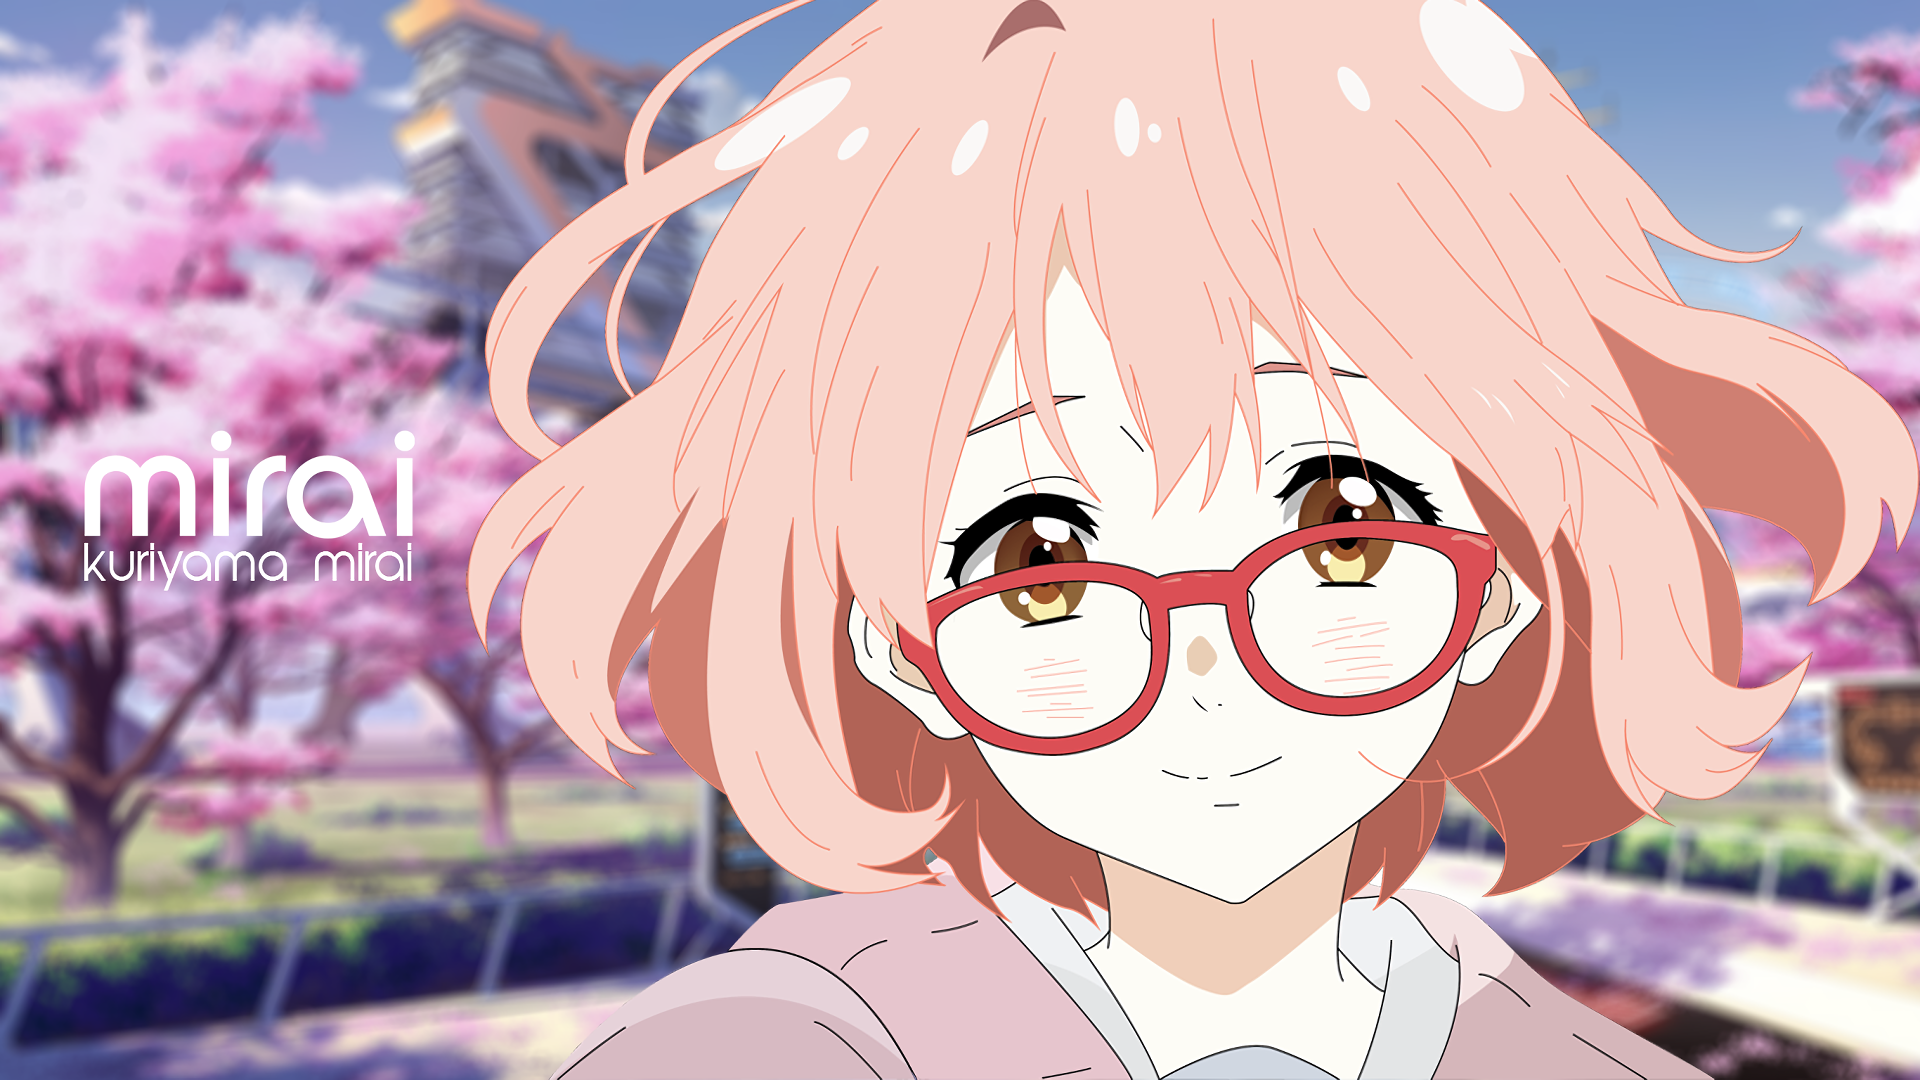 Kyoukai No Kanata Anime Girls Kuriyama Mirai Short Hair Women With Glasses Fan Art 2D Sakura Tree Re 1920x1080